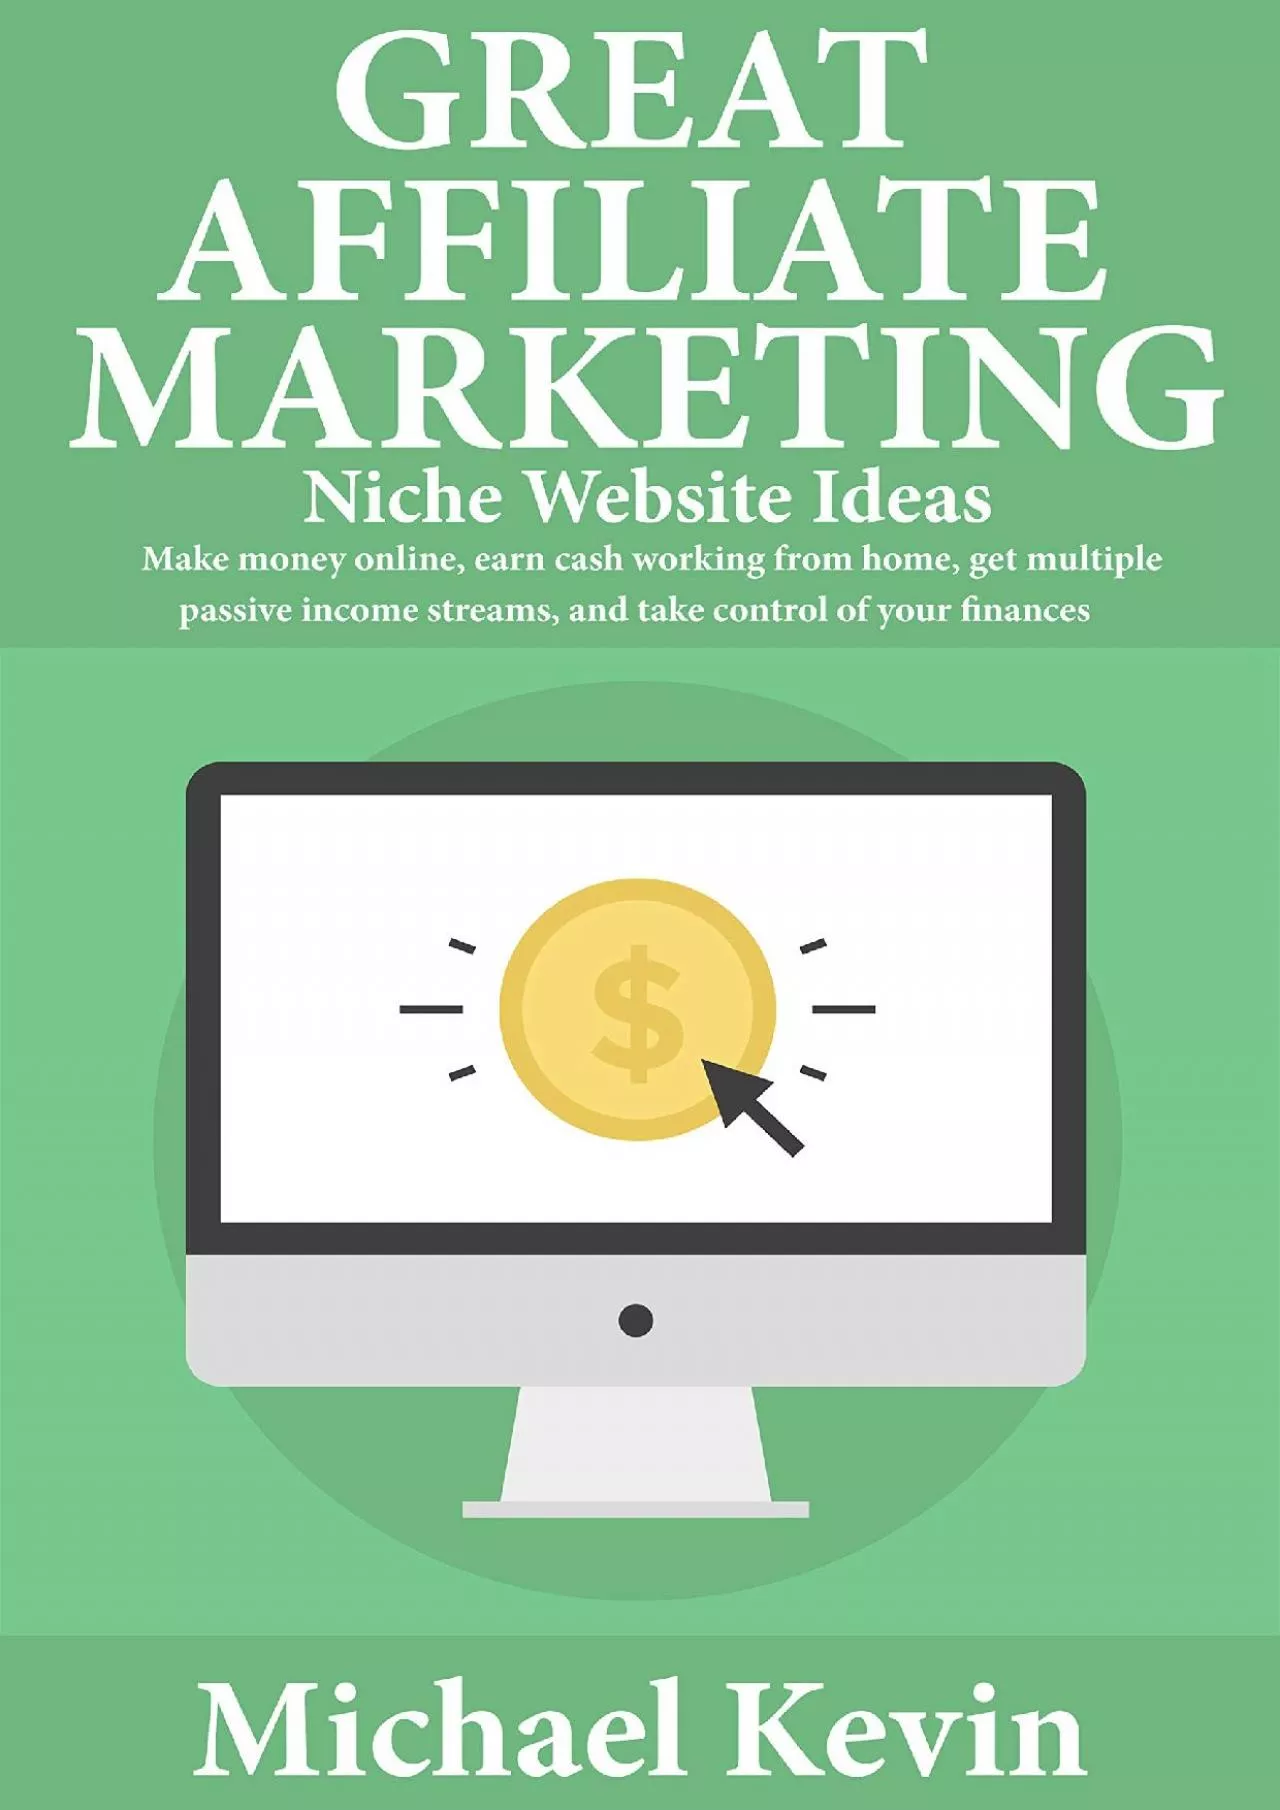 Great Affiliate Marketing Niche Website Ideas: Make Money Online, Earn Cash Working from